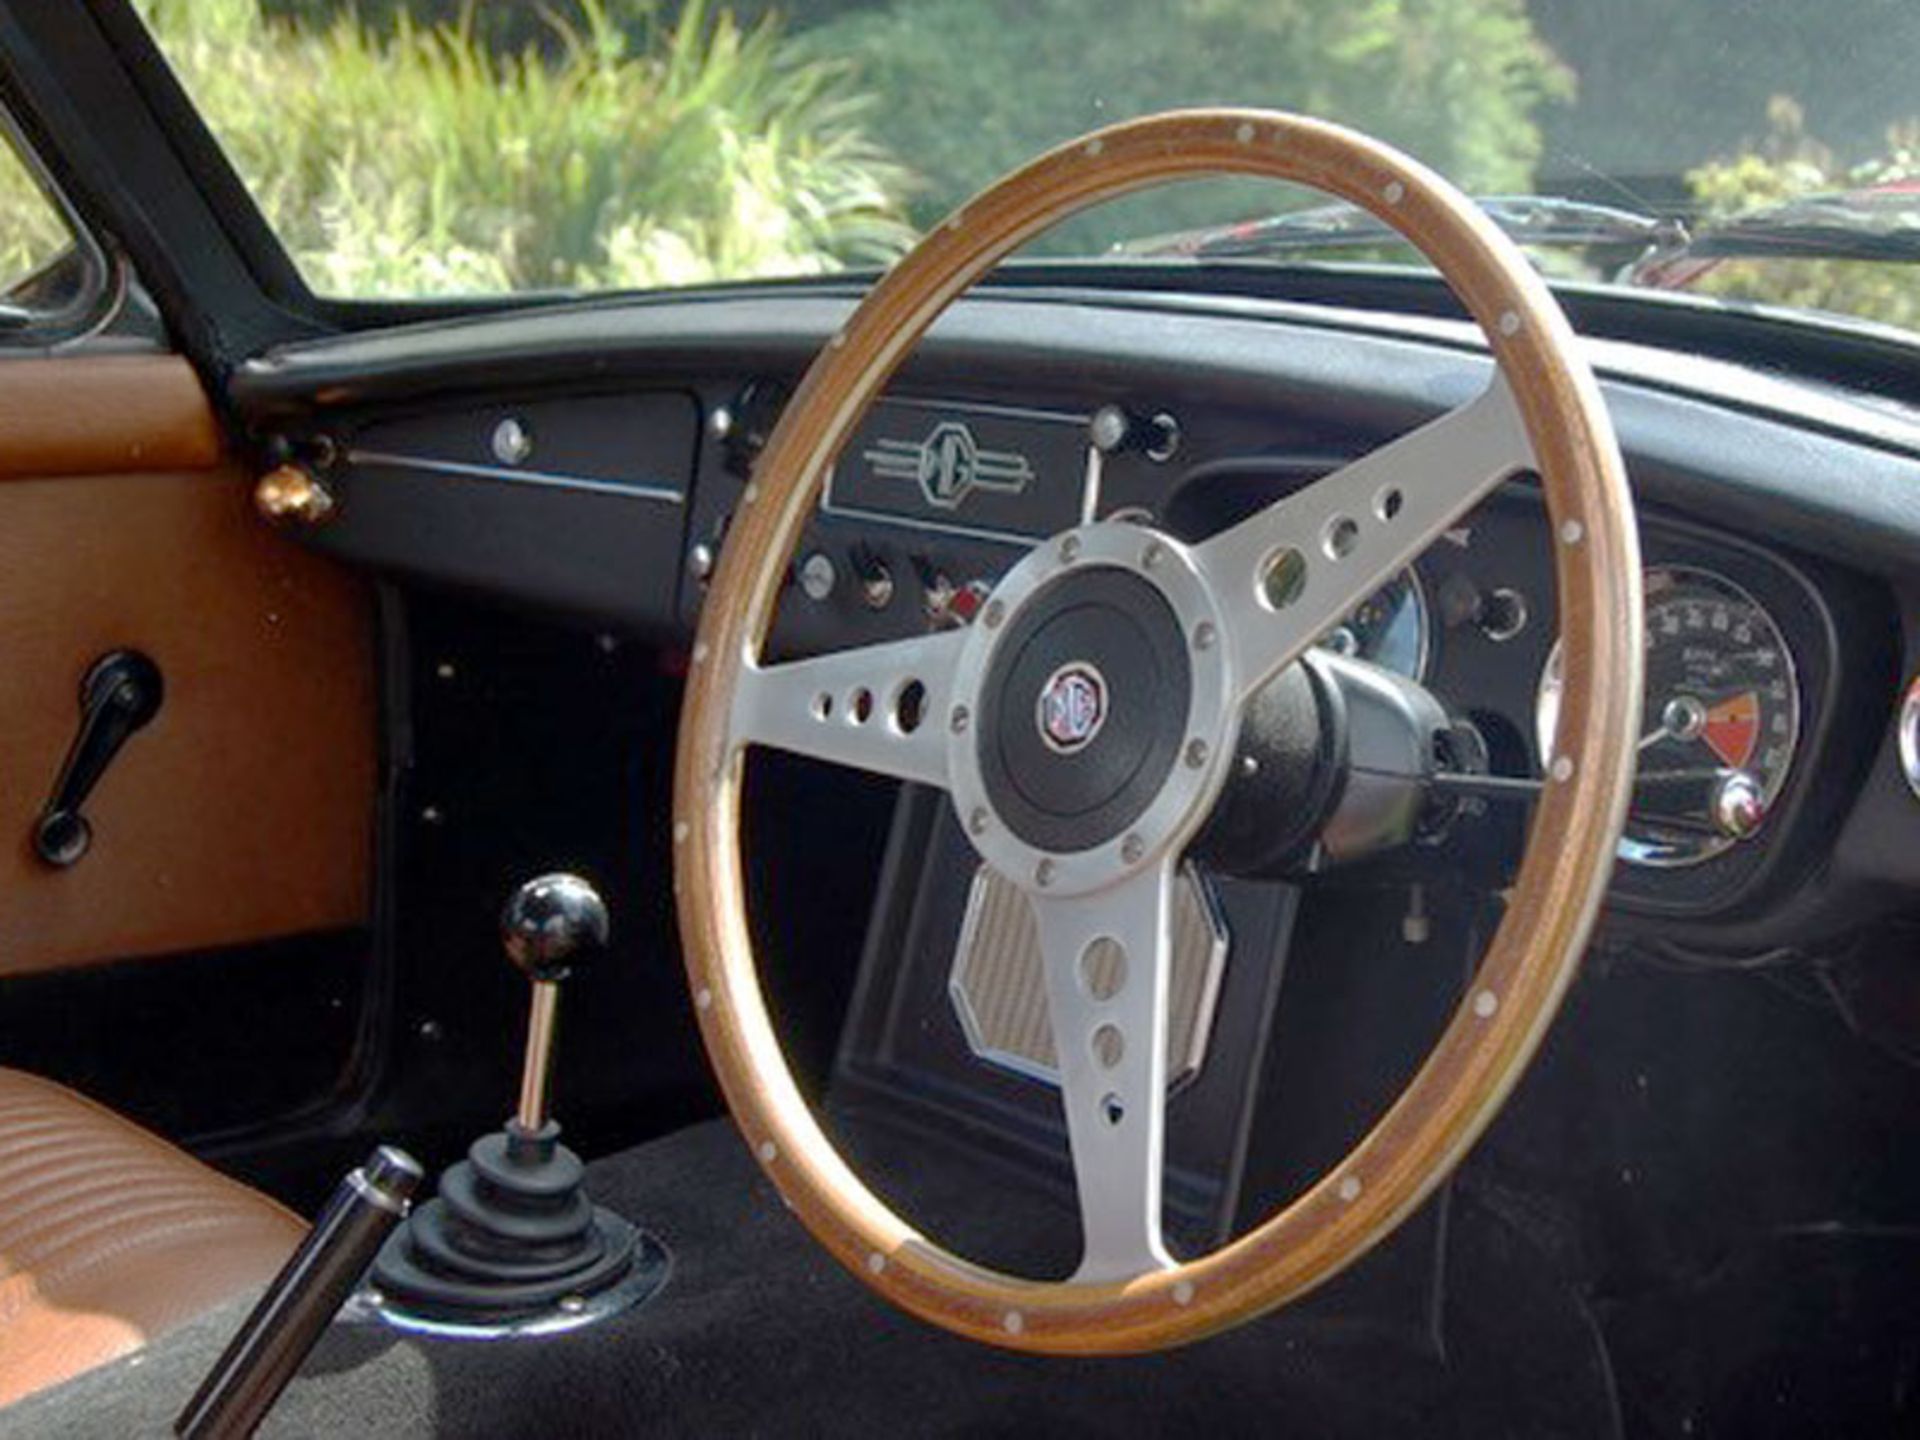 1971 MG B GT - Image 4 of 6